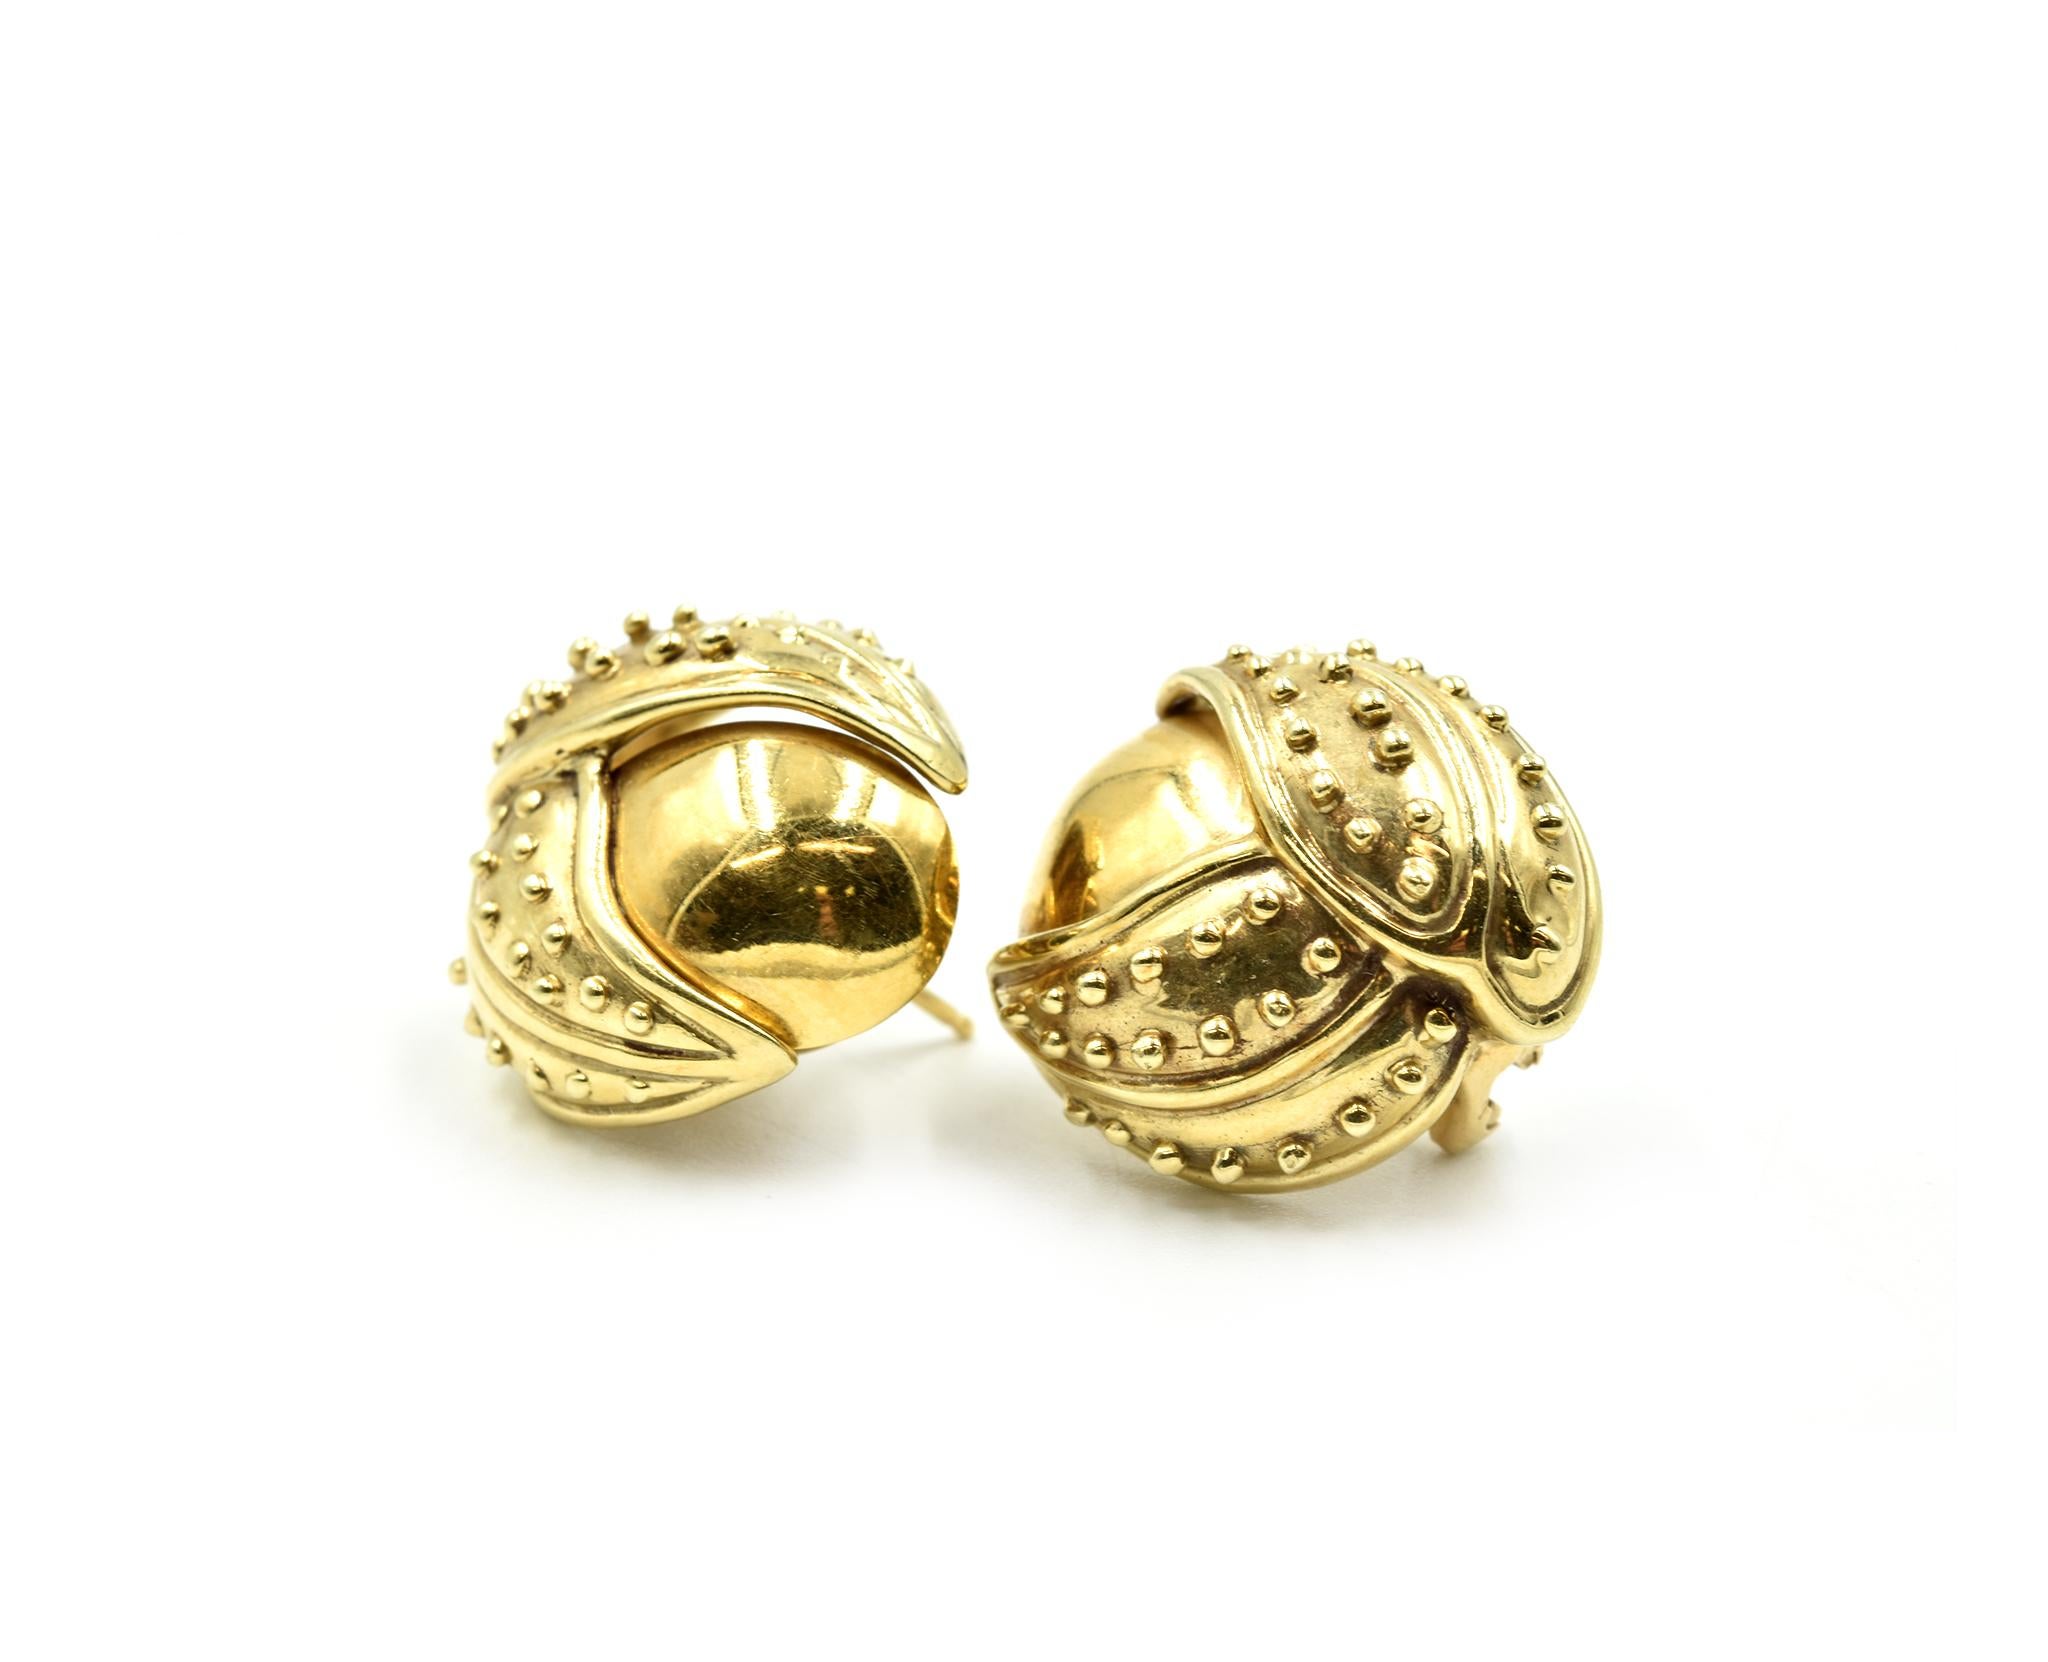 Designer: custom design
Material: 18k yellow gold
Dimensions: each earring is 1-inch in diameter
Fastenings: omega backs
Weight: 15.32 grams